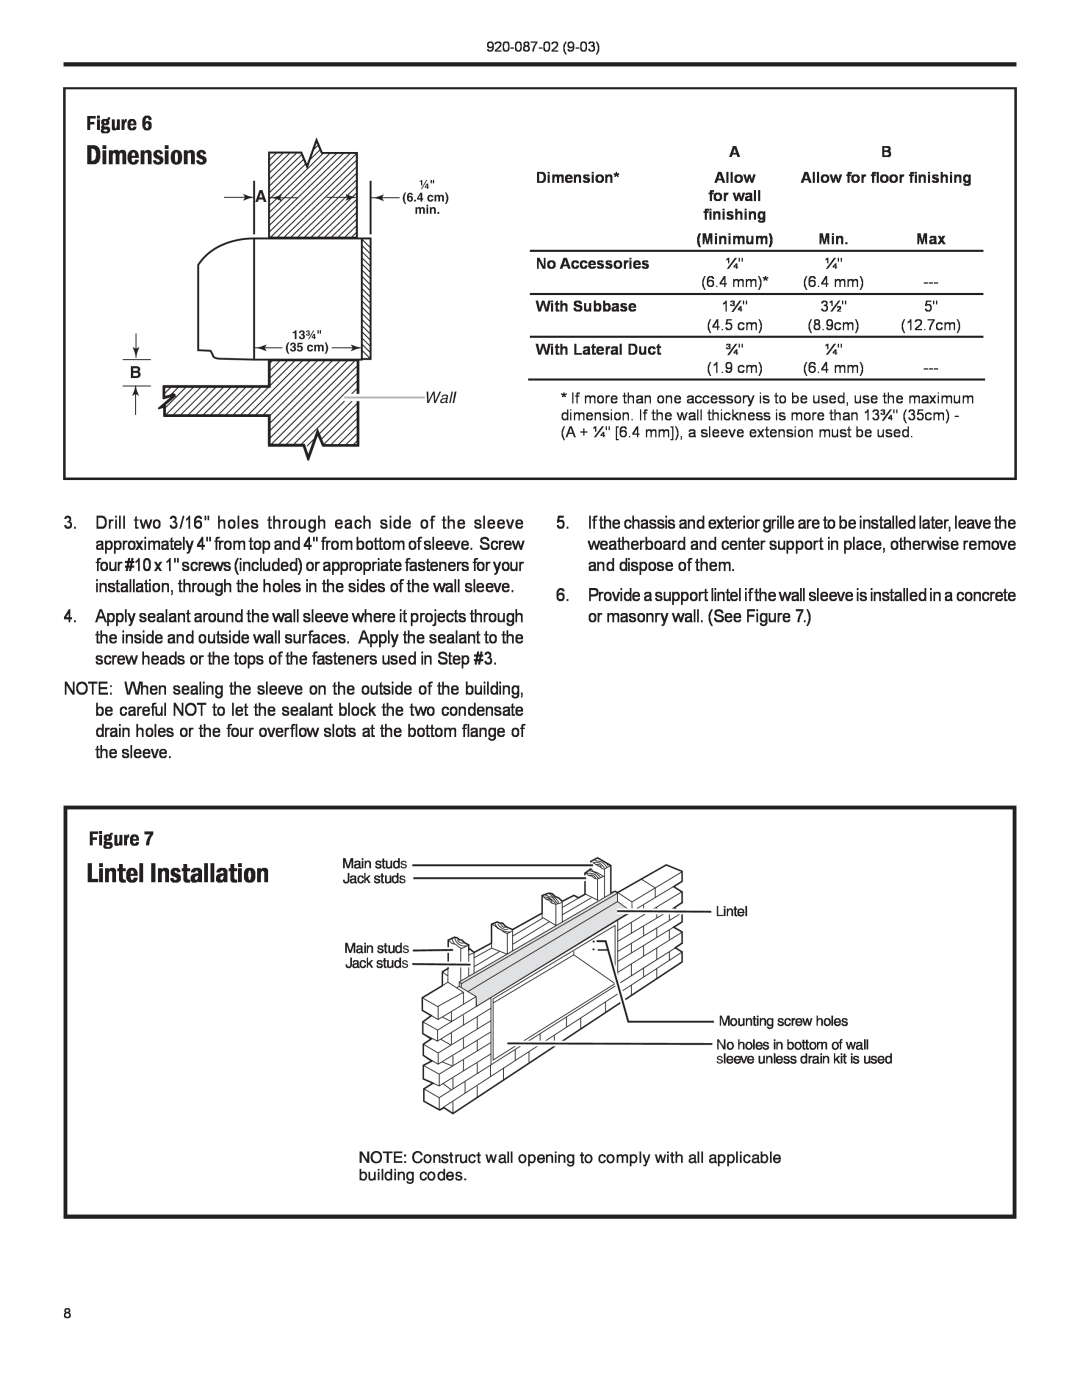 Friedrich PTAC operation manual Dimensions, Lintel Installation 